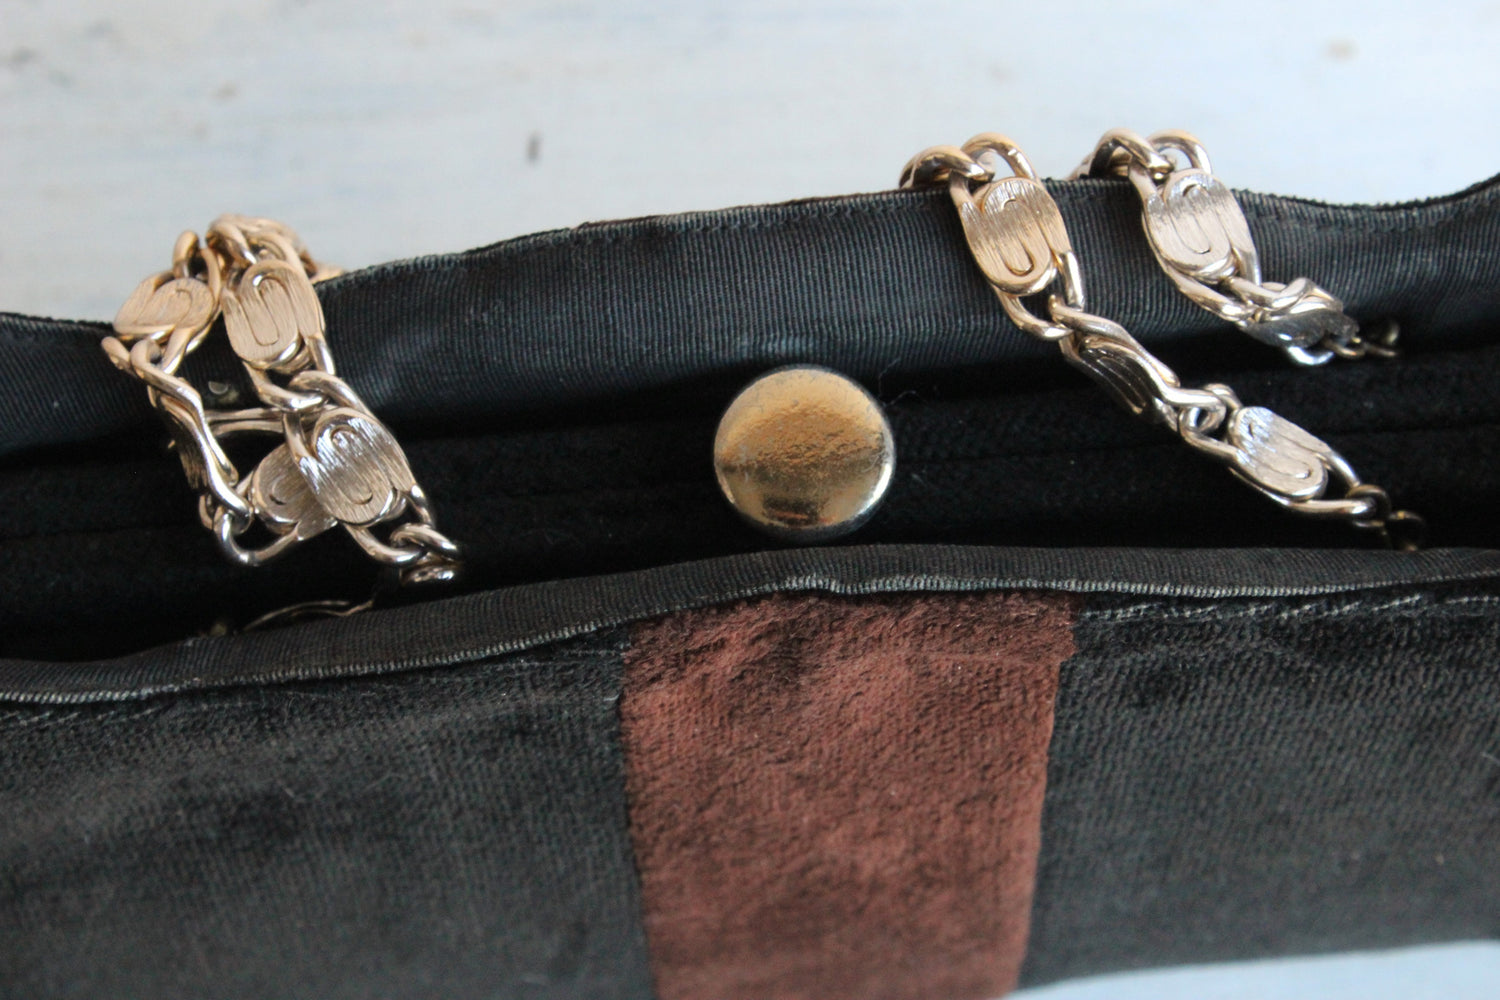 Vintage 1970s Black and Brown Velvet Handbag